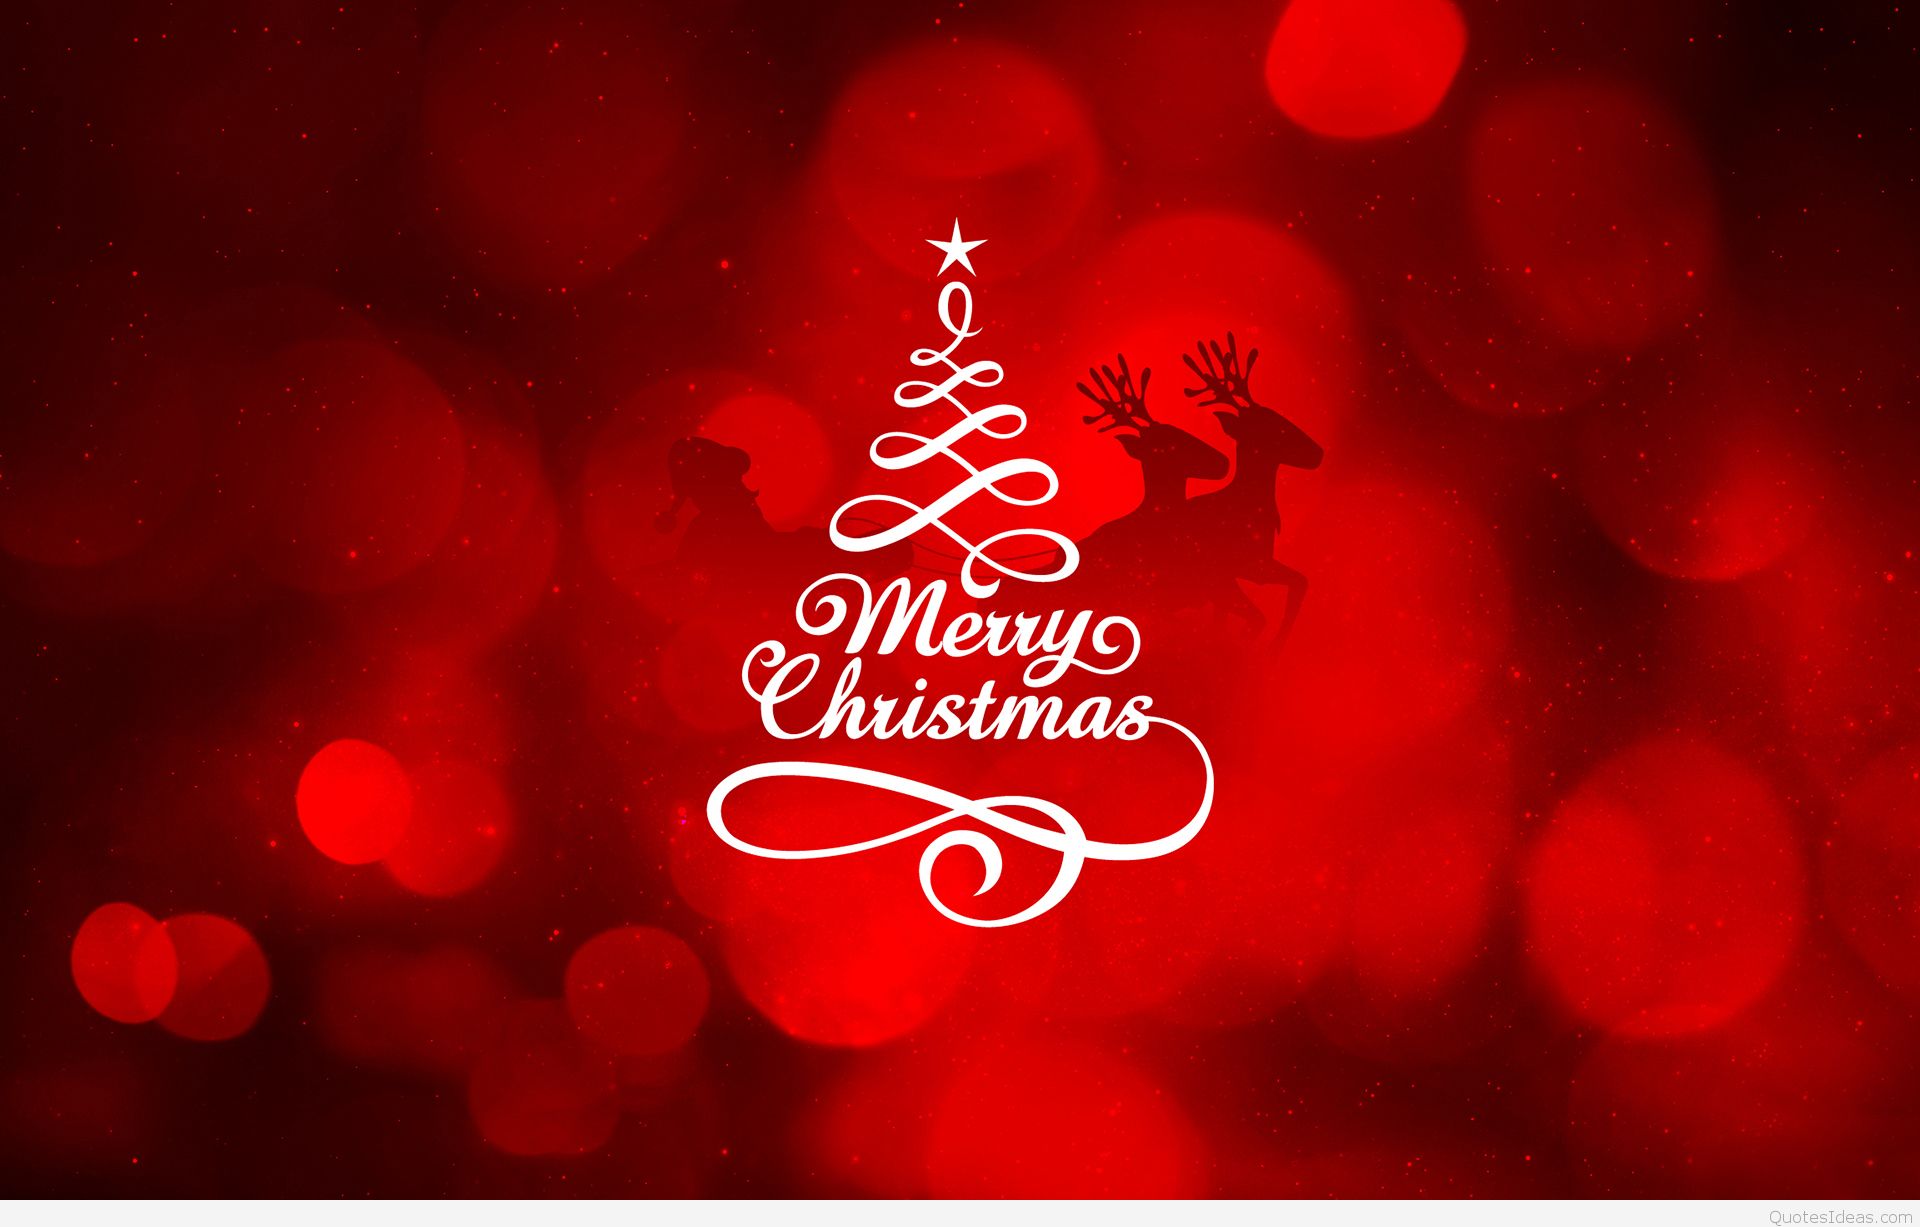 Merry Xmas Image HD Wallpaper